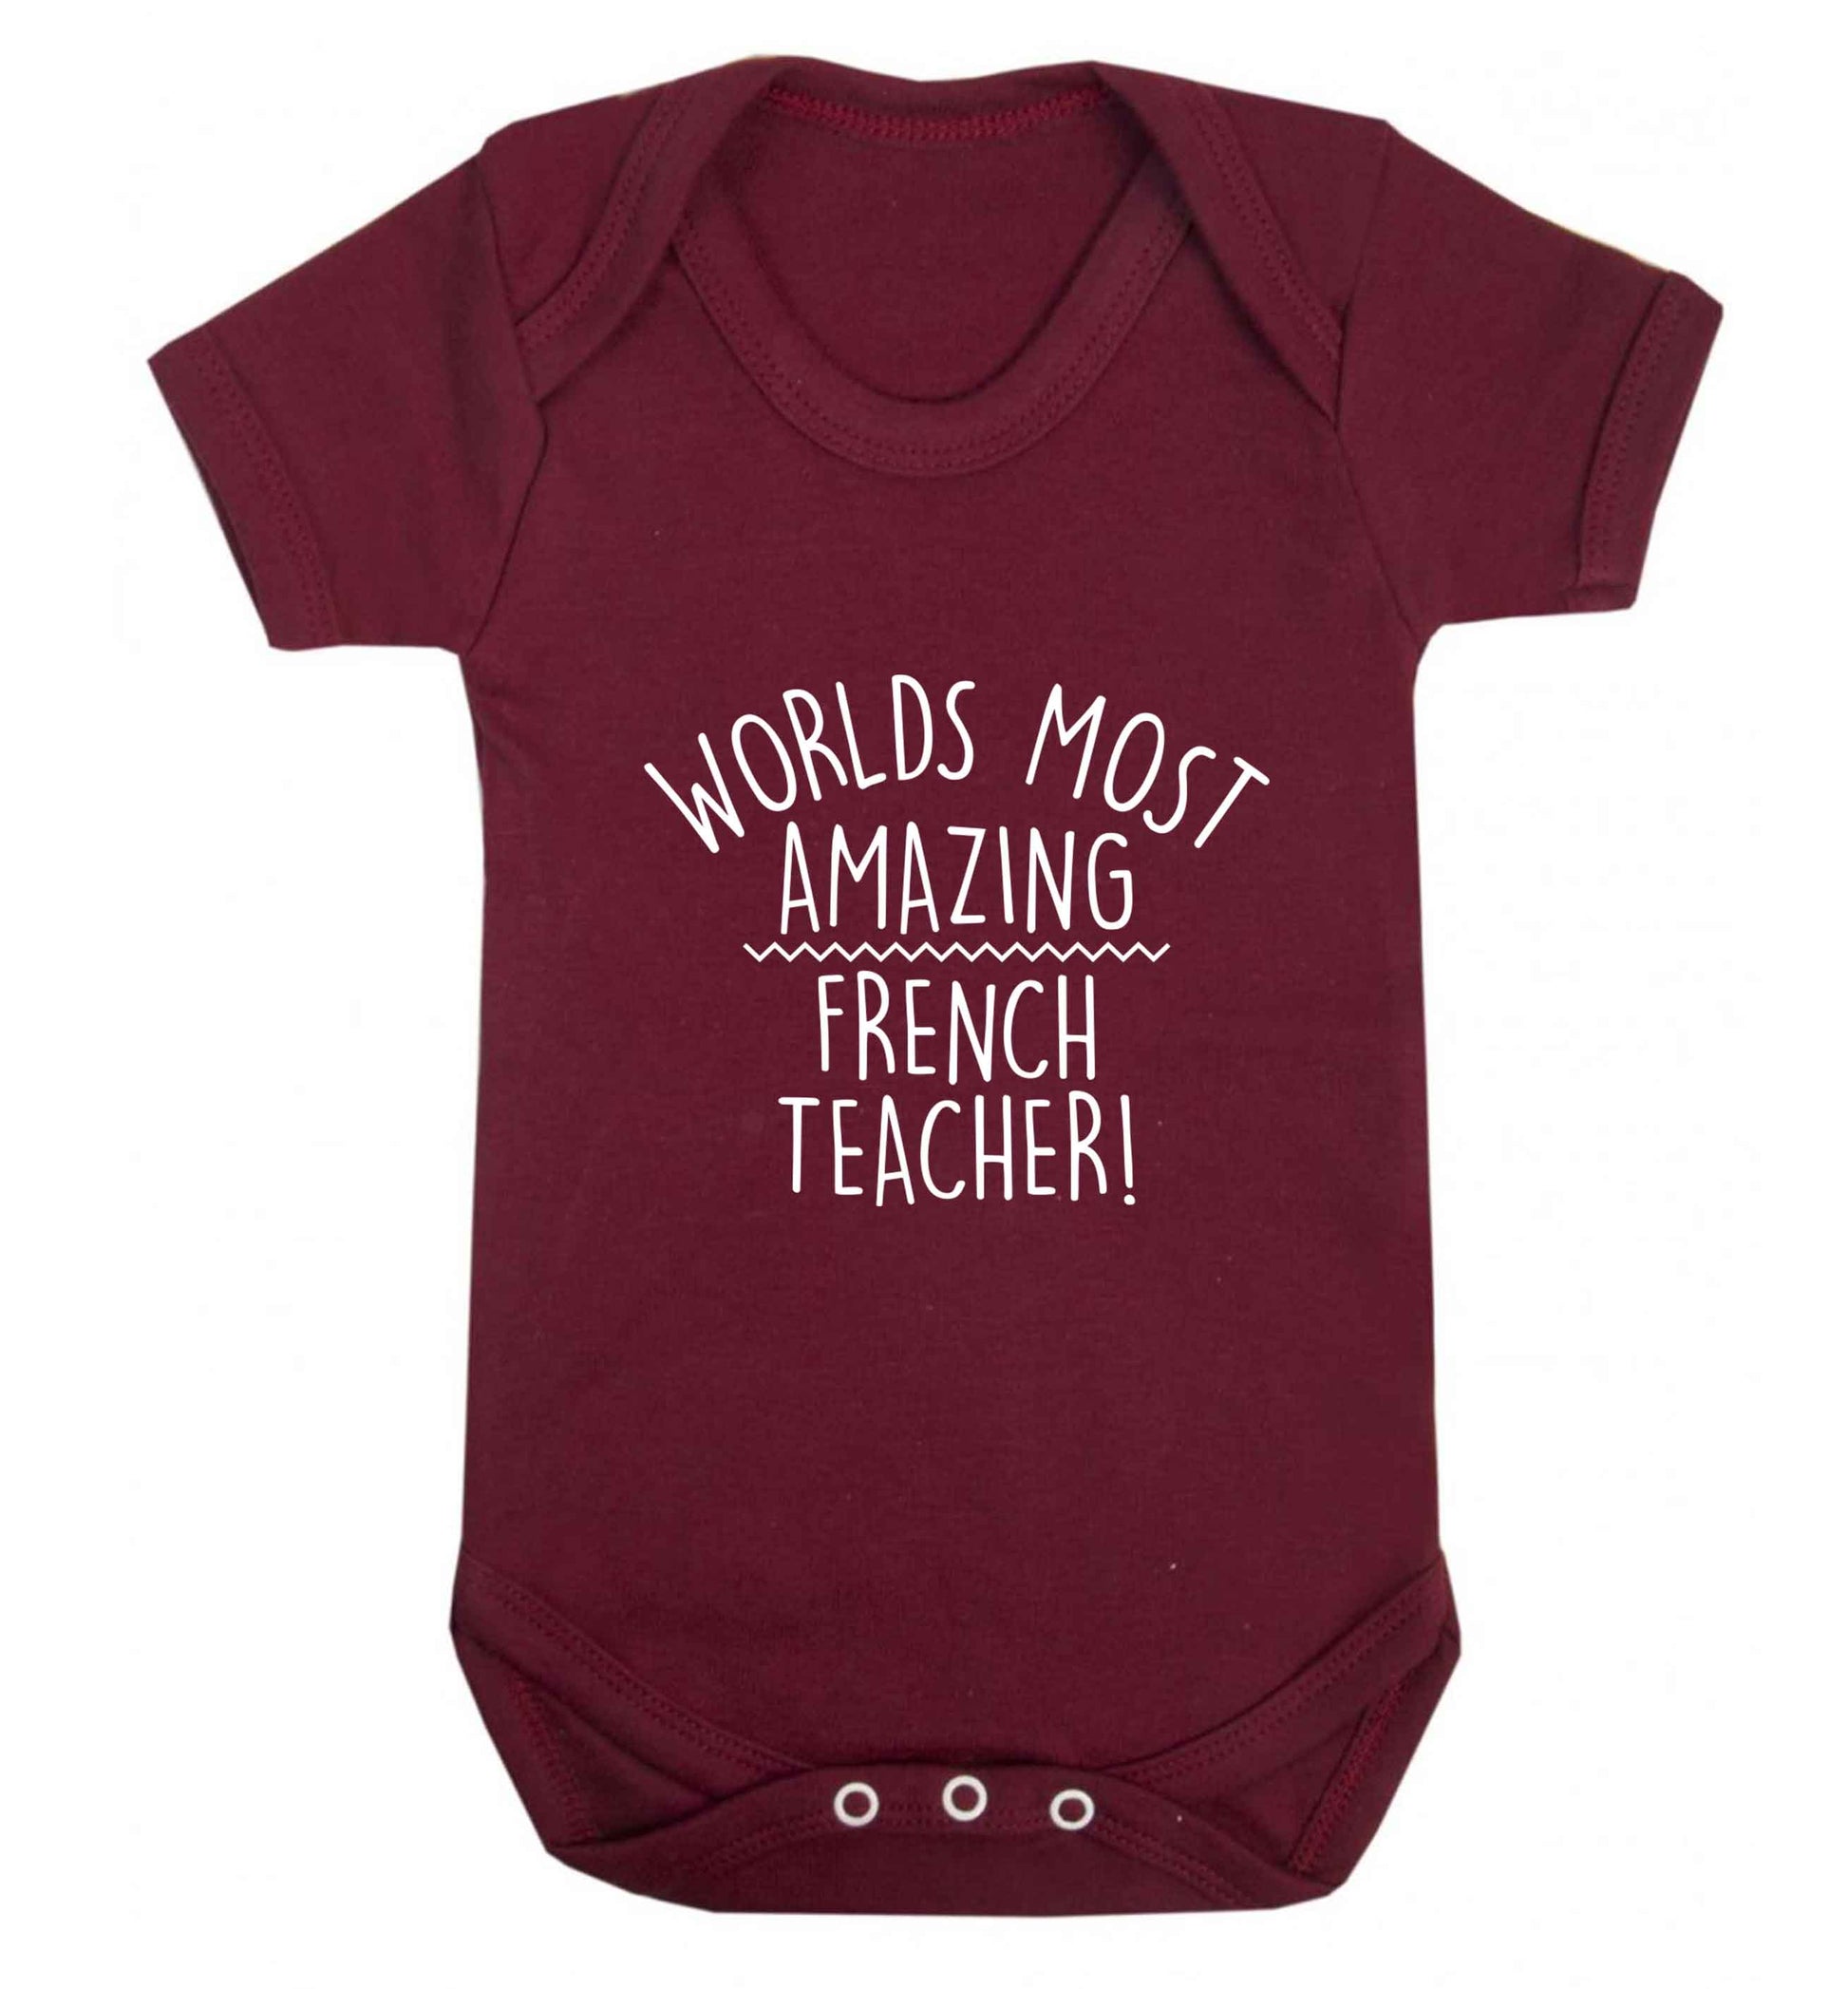 Worlds most amazing French teacher baby vest maroon 18-24 months